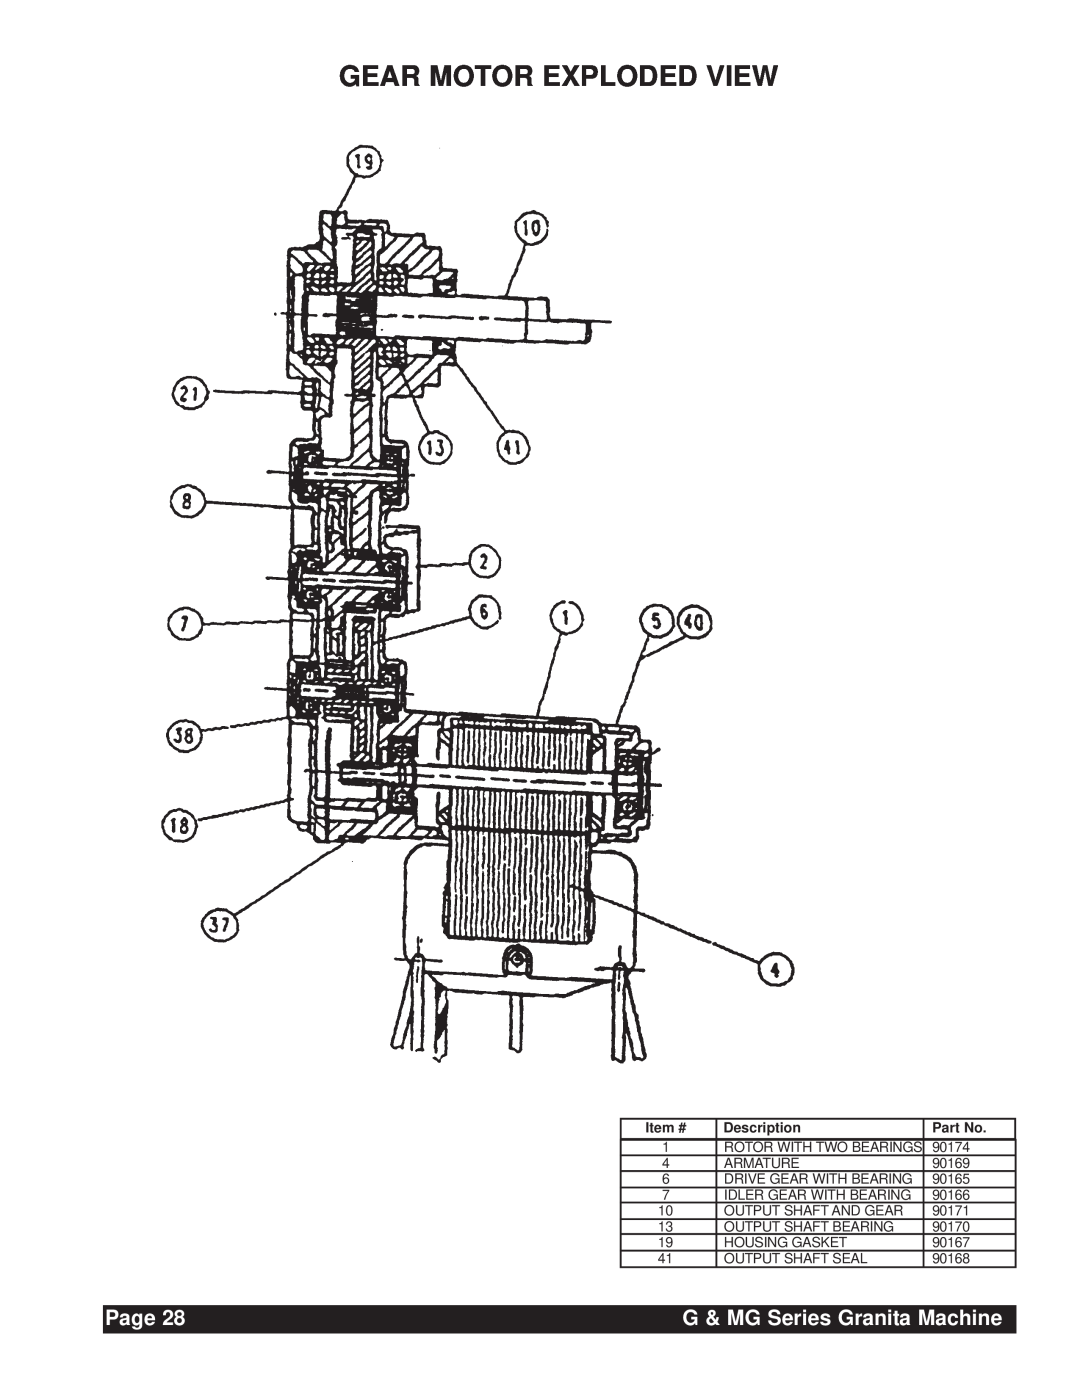 Grindmaster instruction manual Gear Motor Exploded View, Page, G & MG Series Granita Machine, Item #, Description 